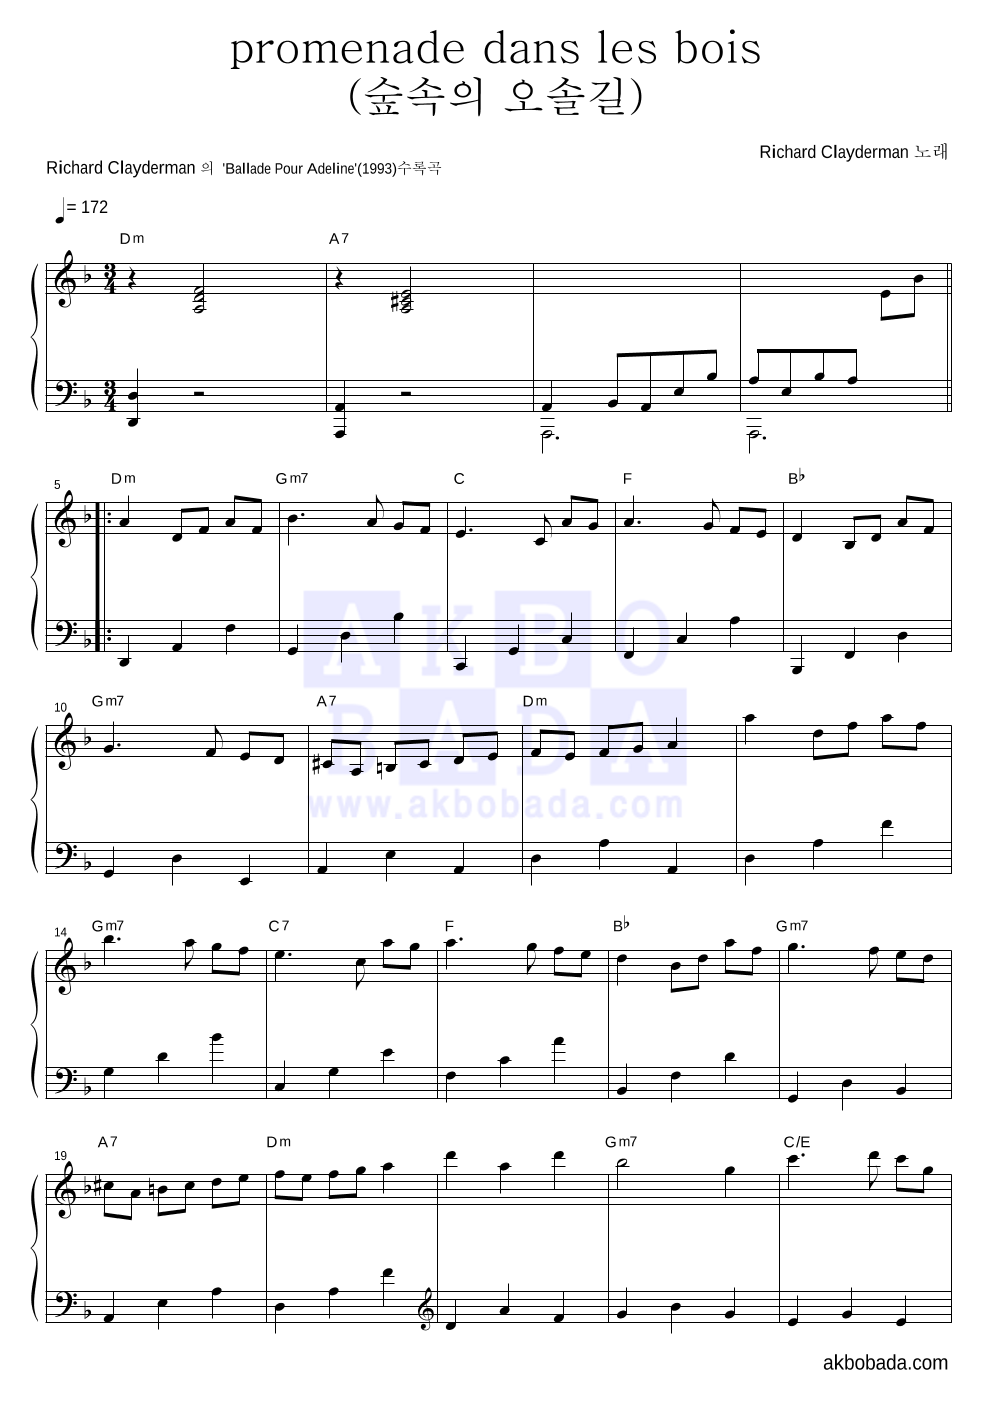 Richard Clayderman  - 숲속의 오솔길 (Promenade Dans Les Bois) 피아노 2단 악보 